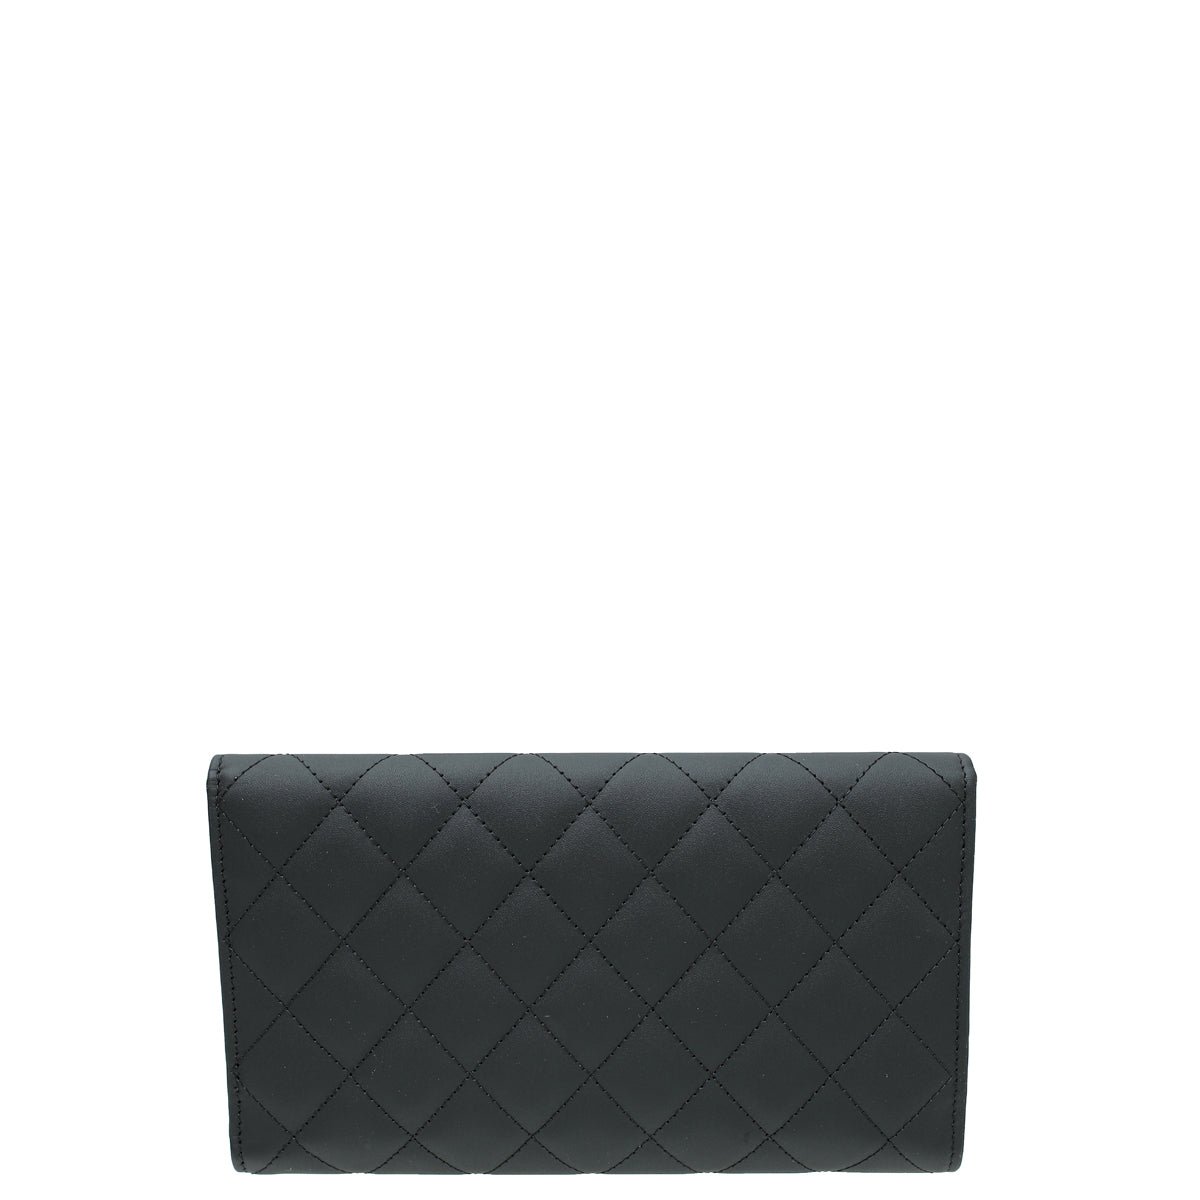 Chanel Black CC Cambon Organizer Large Wallet